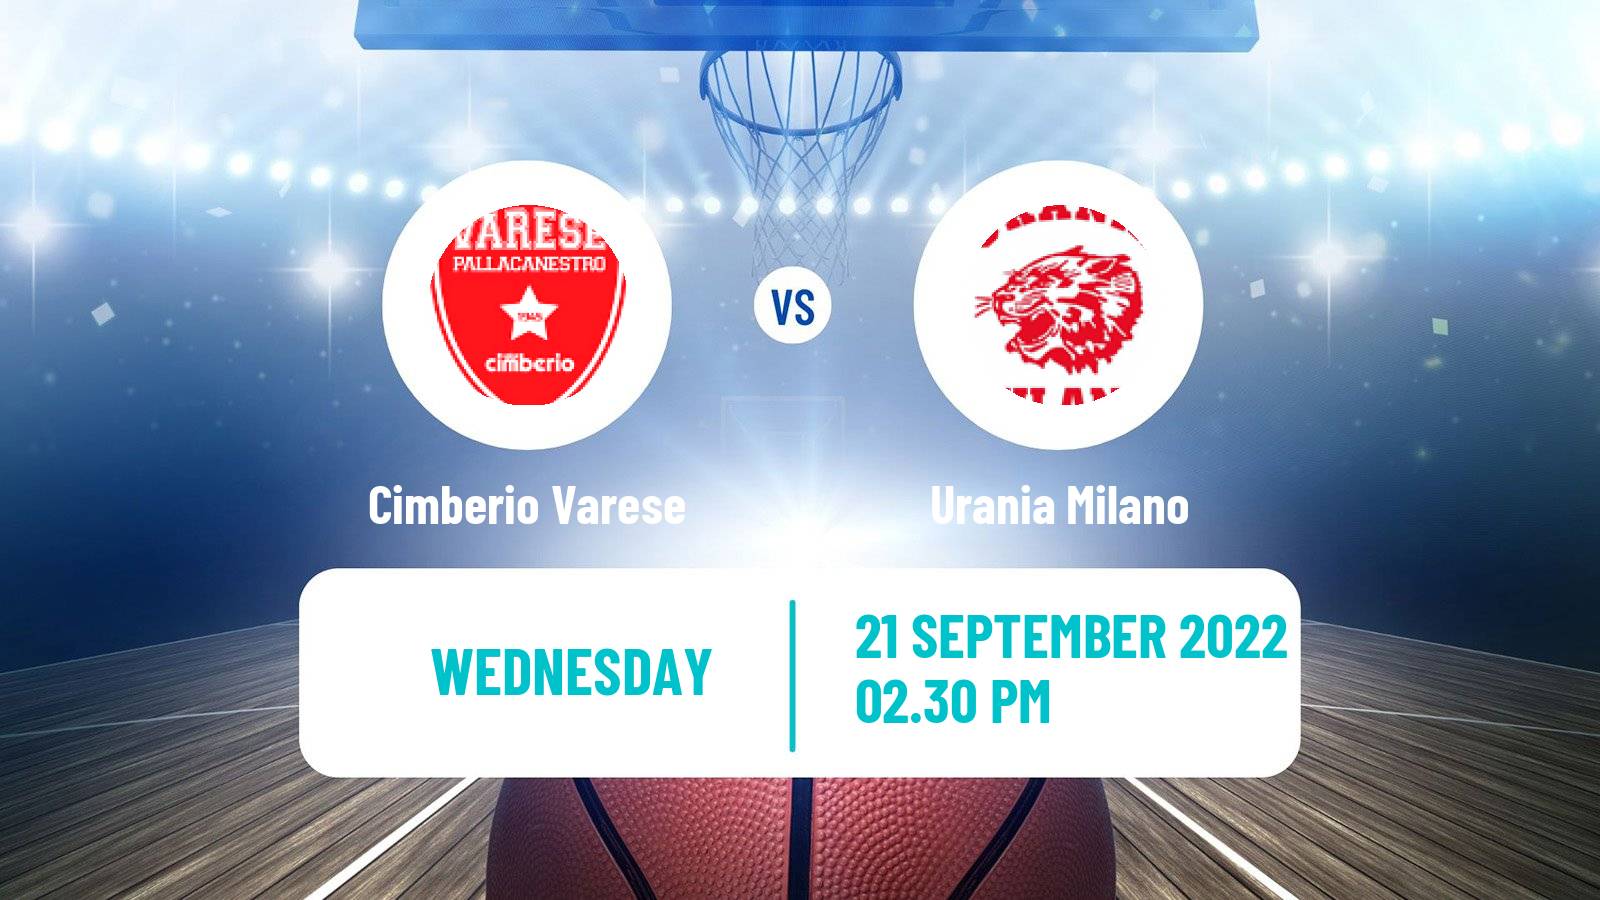 Basketball Club Friendly Basketball Cimberio Varese - Urania Milano